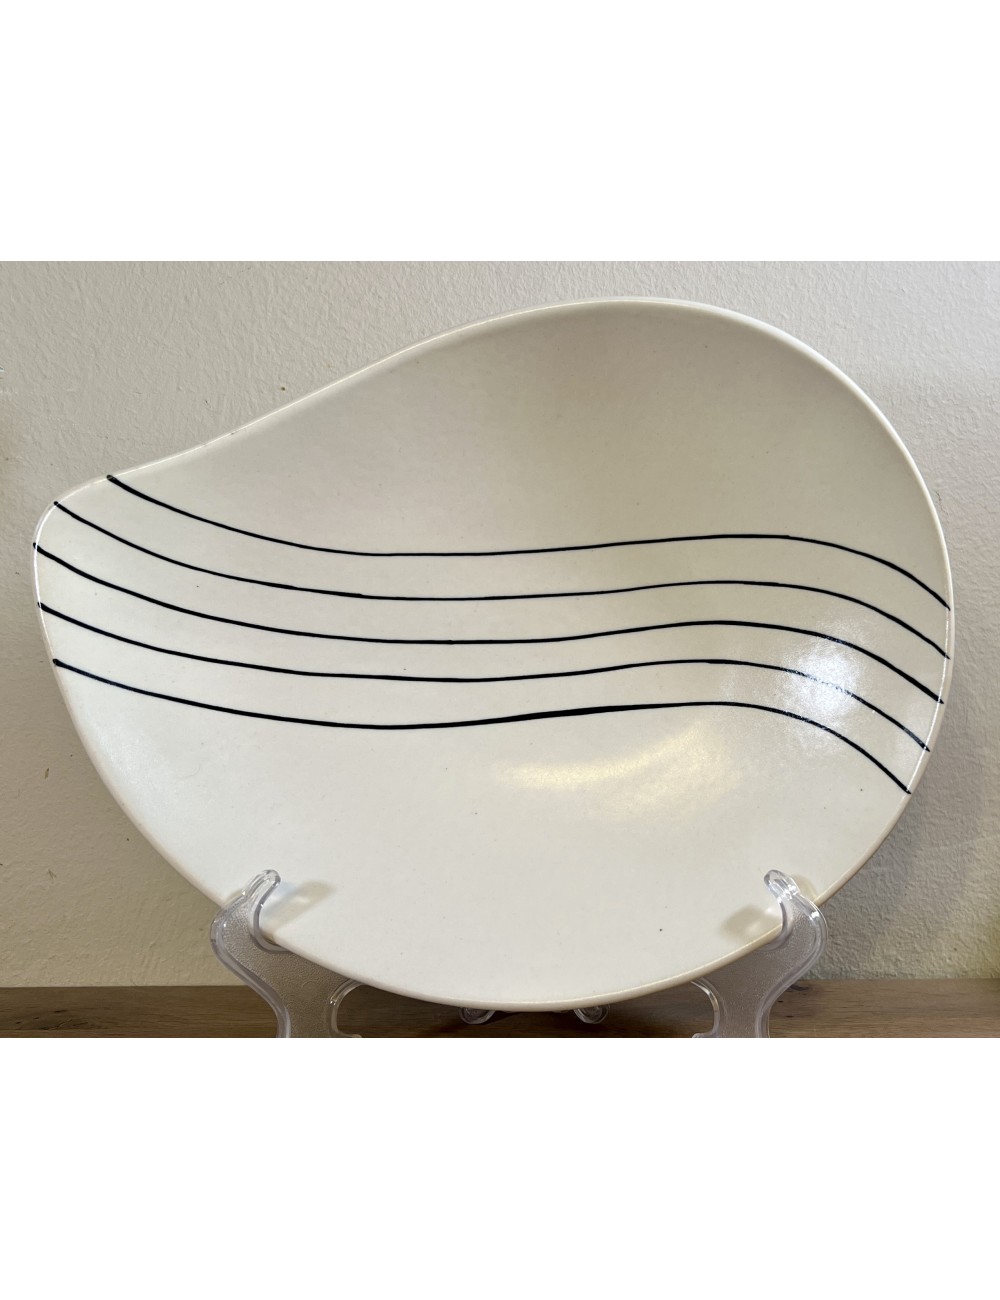 Fruit bowl / Tear dish - unmarked but Petrus Regout - by design Wim Visser - handpainted, numbered 125.ZA